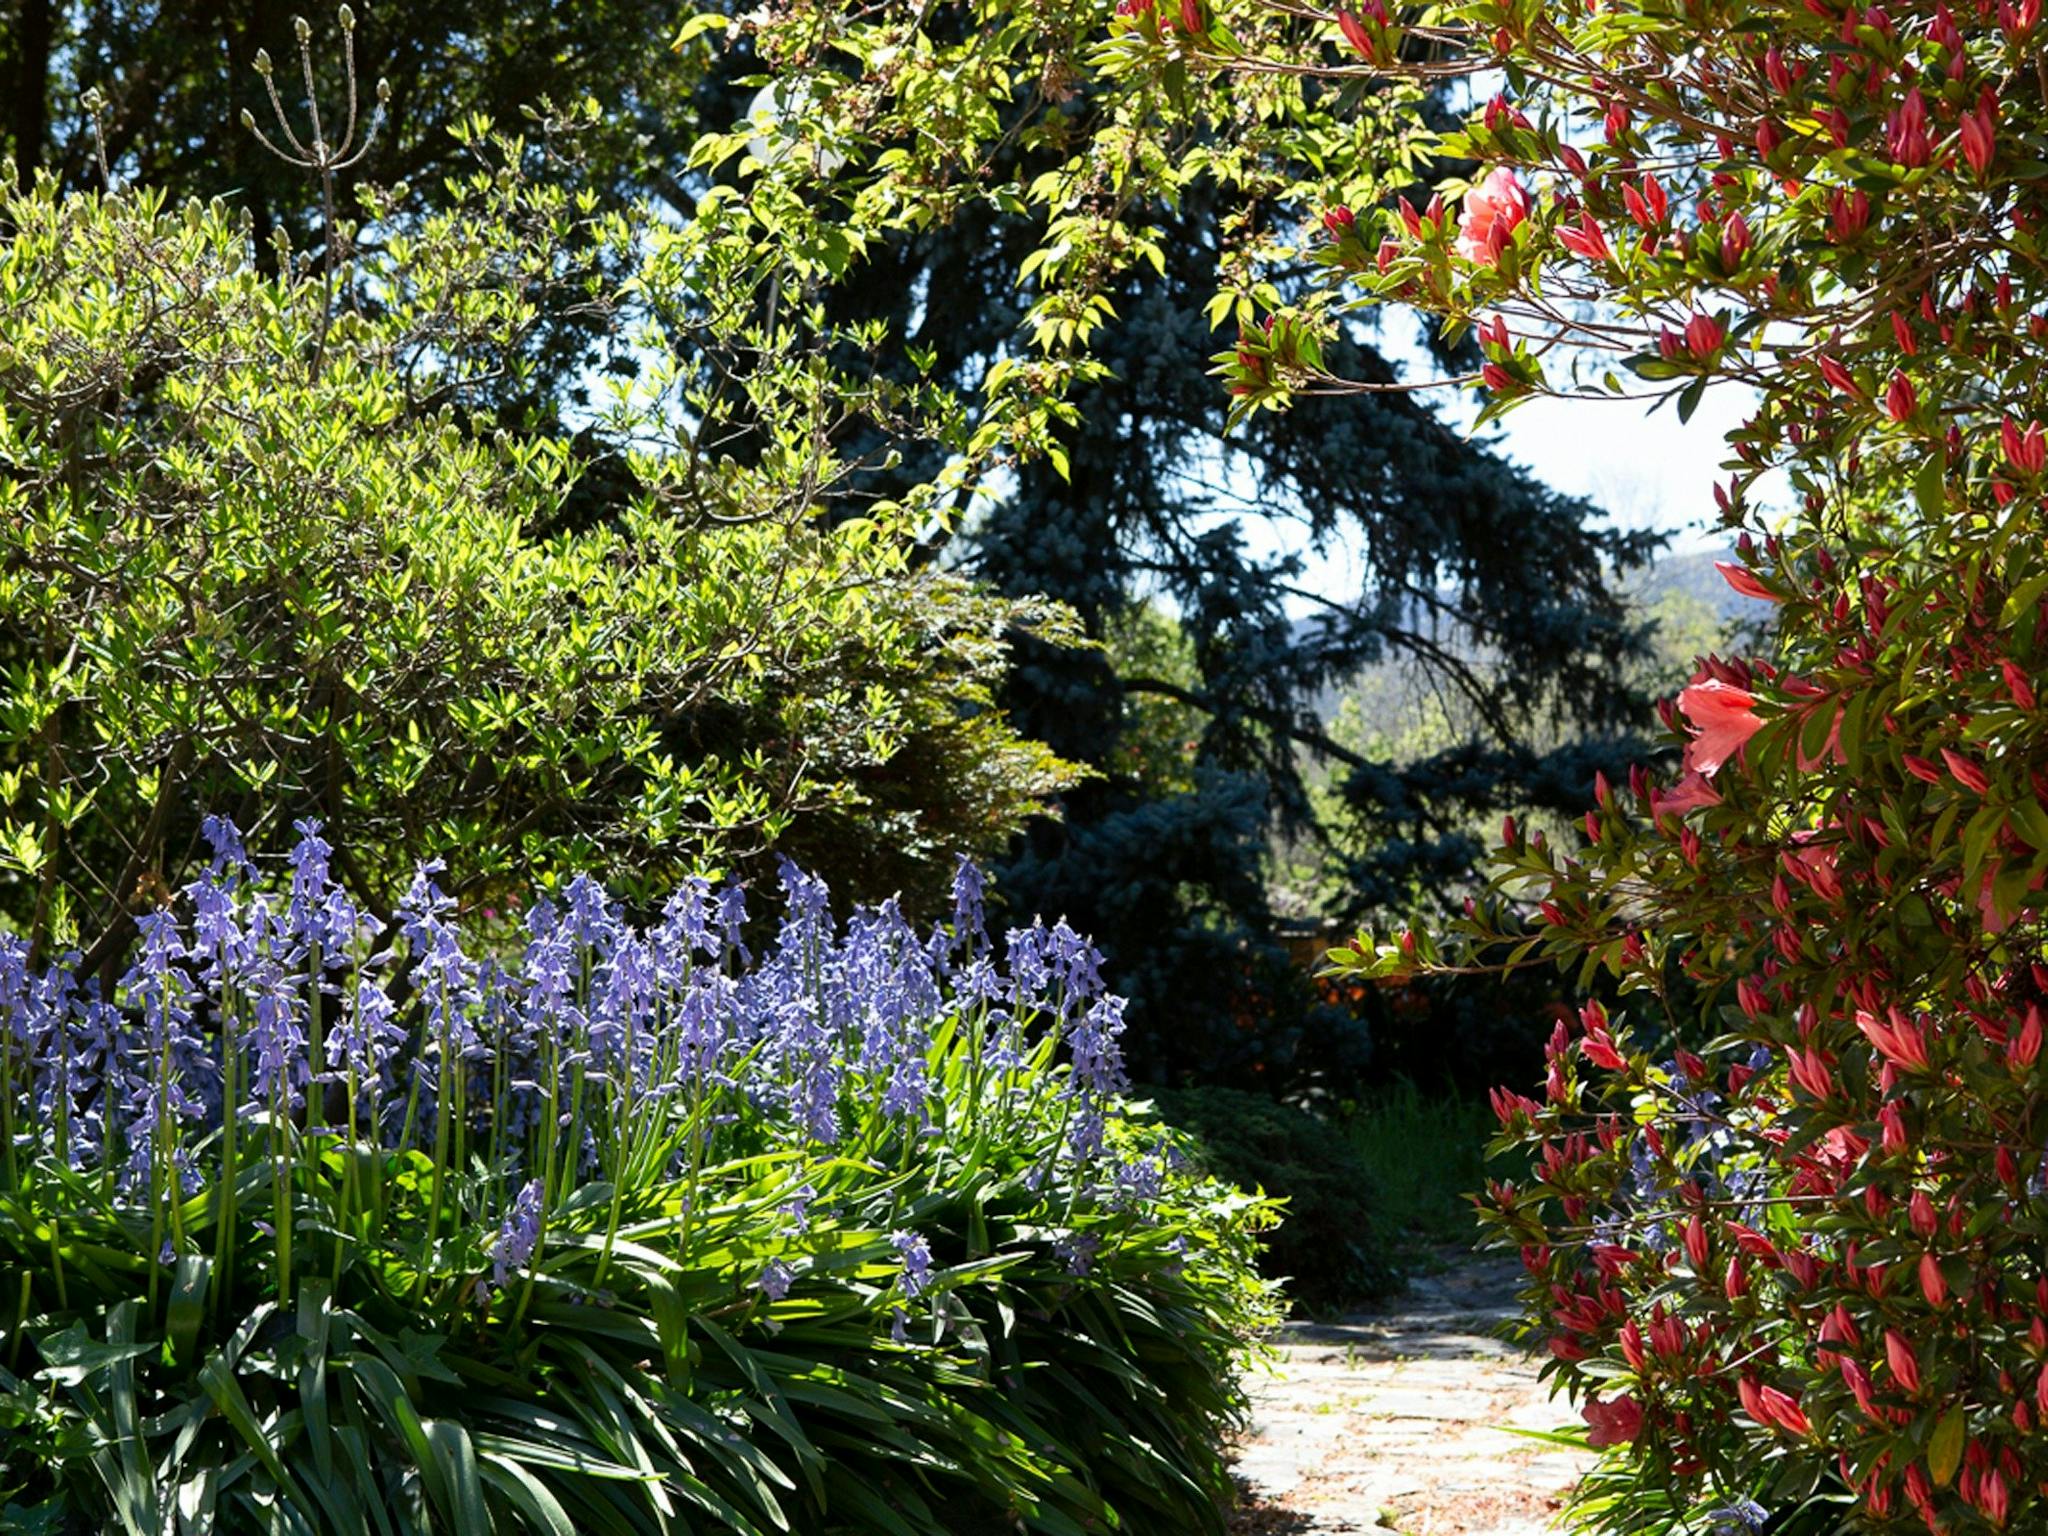 Rosetta's garden in bloom